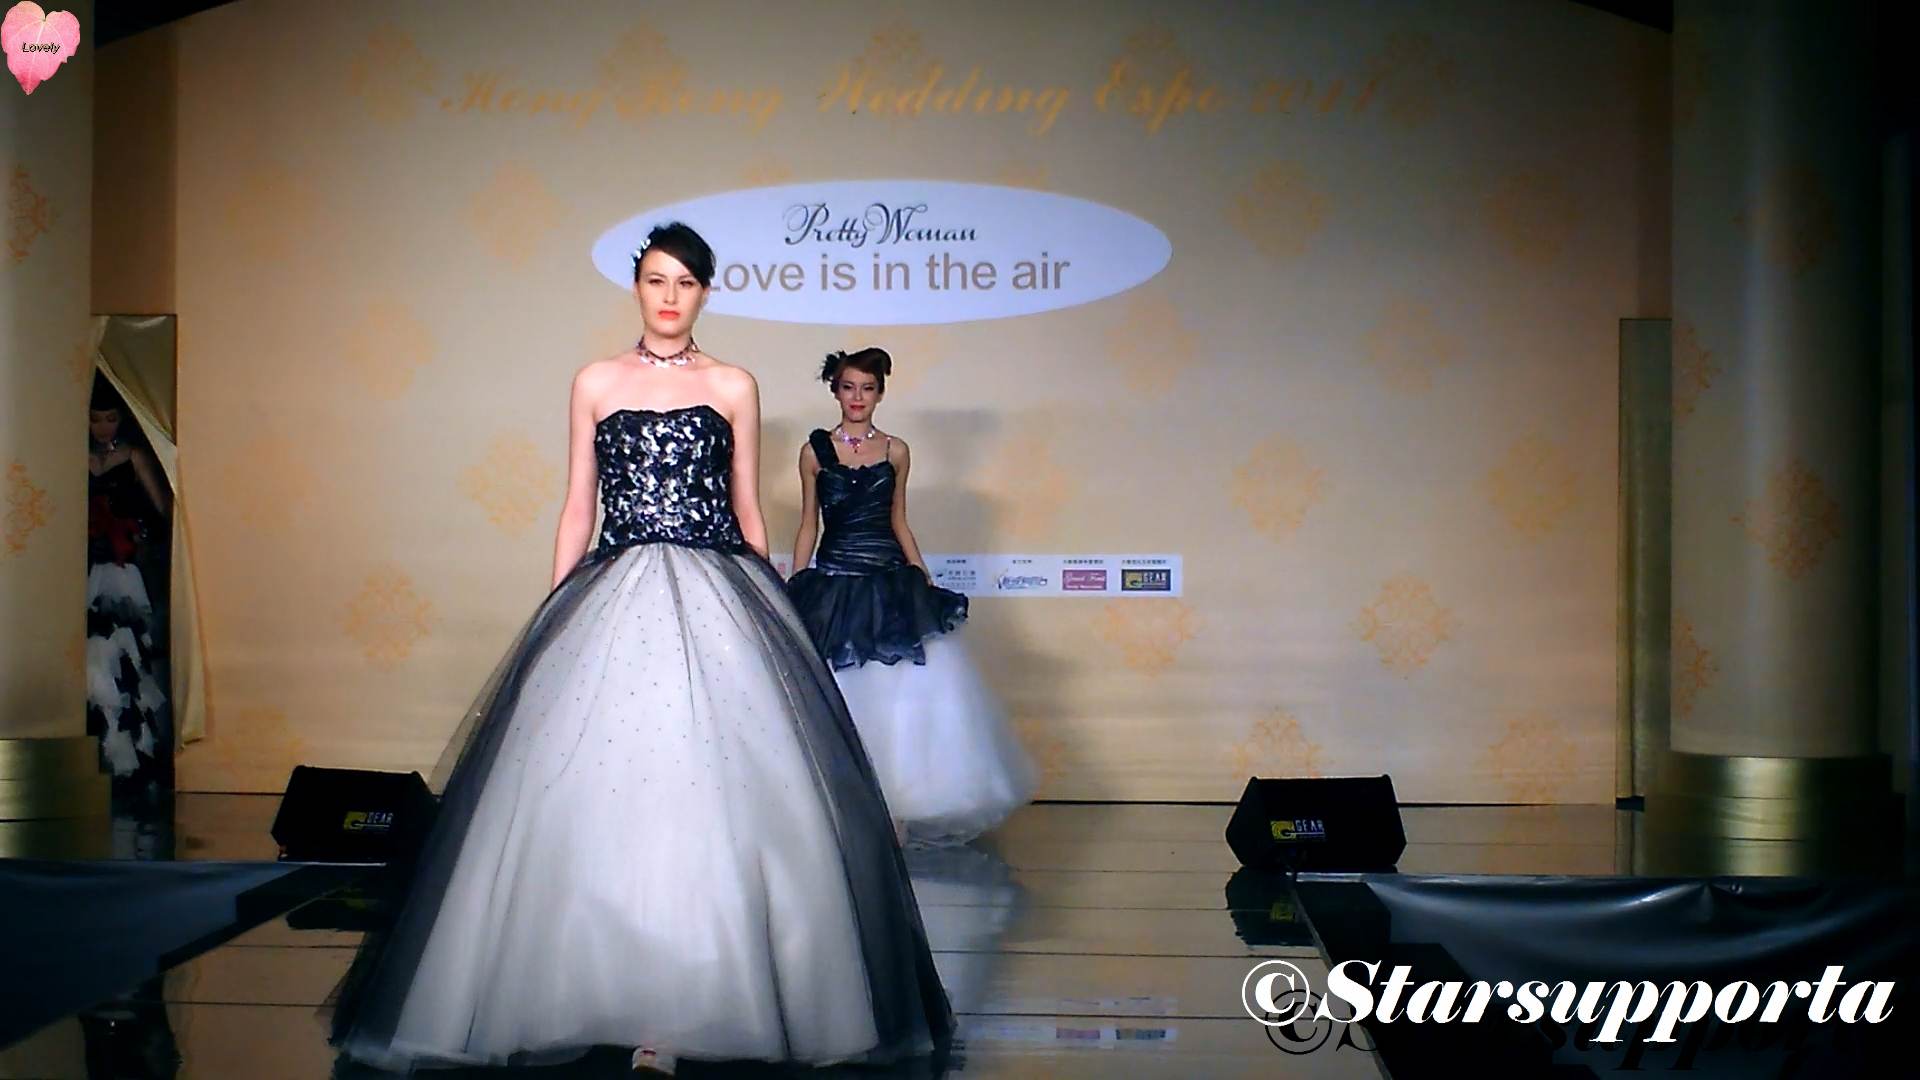 20111105 Hong Kong Wedding Expo - Pretty Woman: Love is in the air @ 香港會議展覽中心 HKCEC (video)